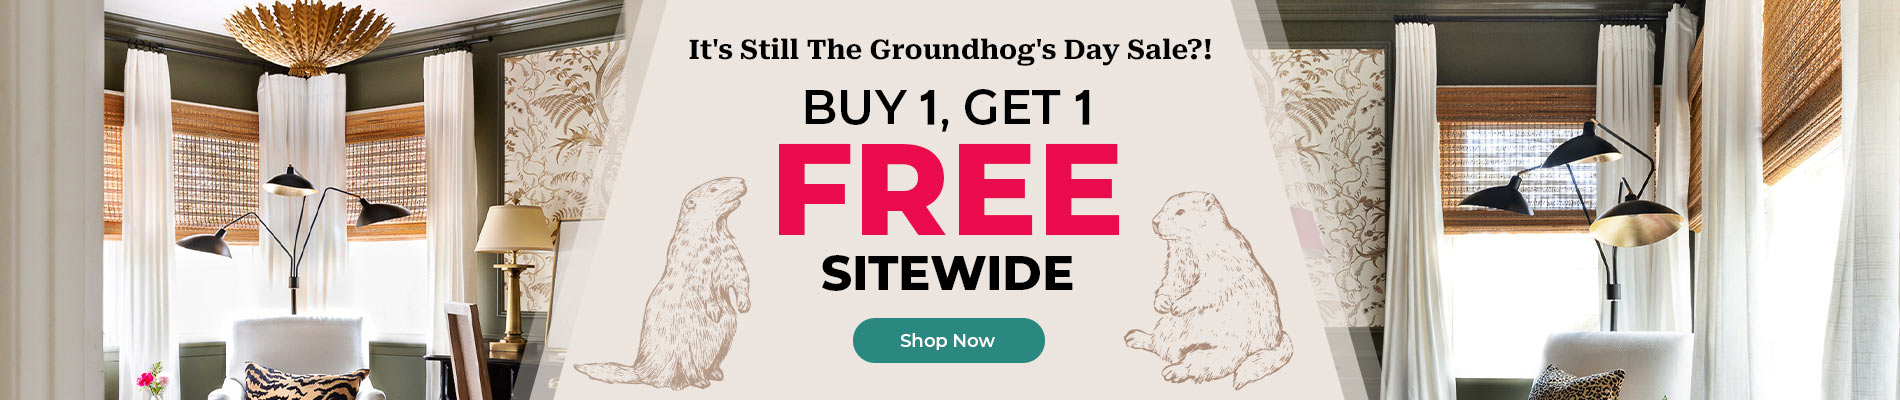 Groundhog's Day Sale!